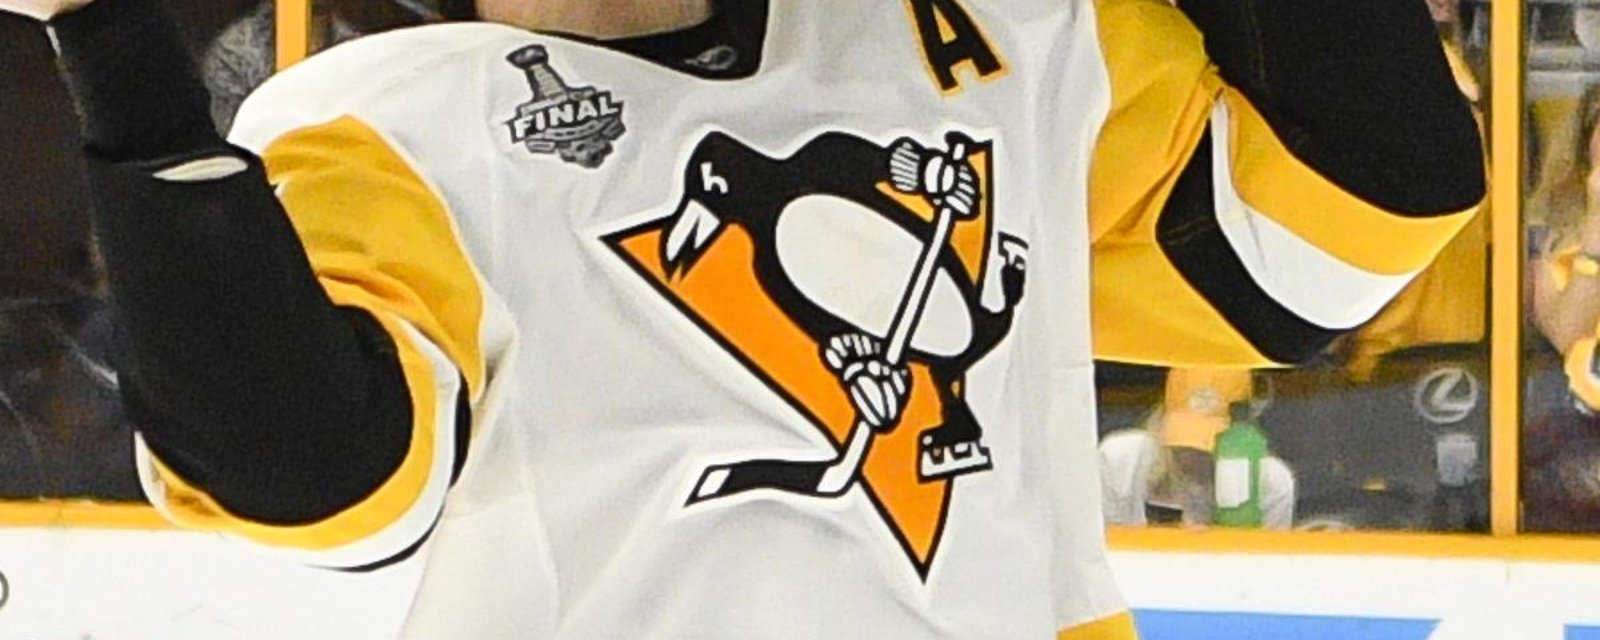 Stanley Cup hero to depart Penguins this summer